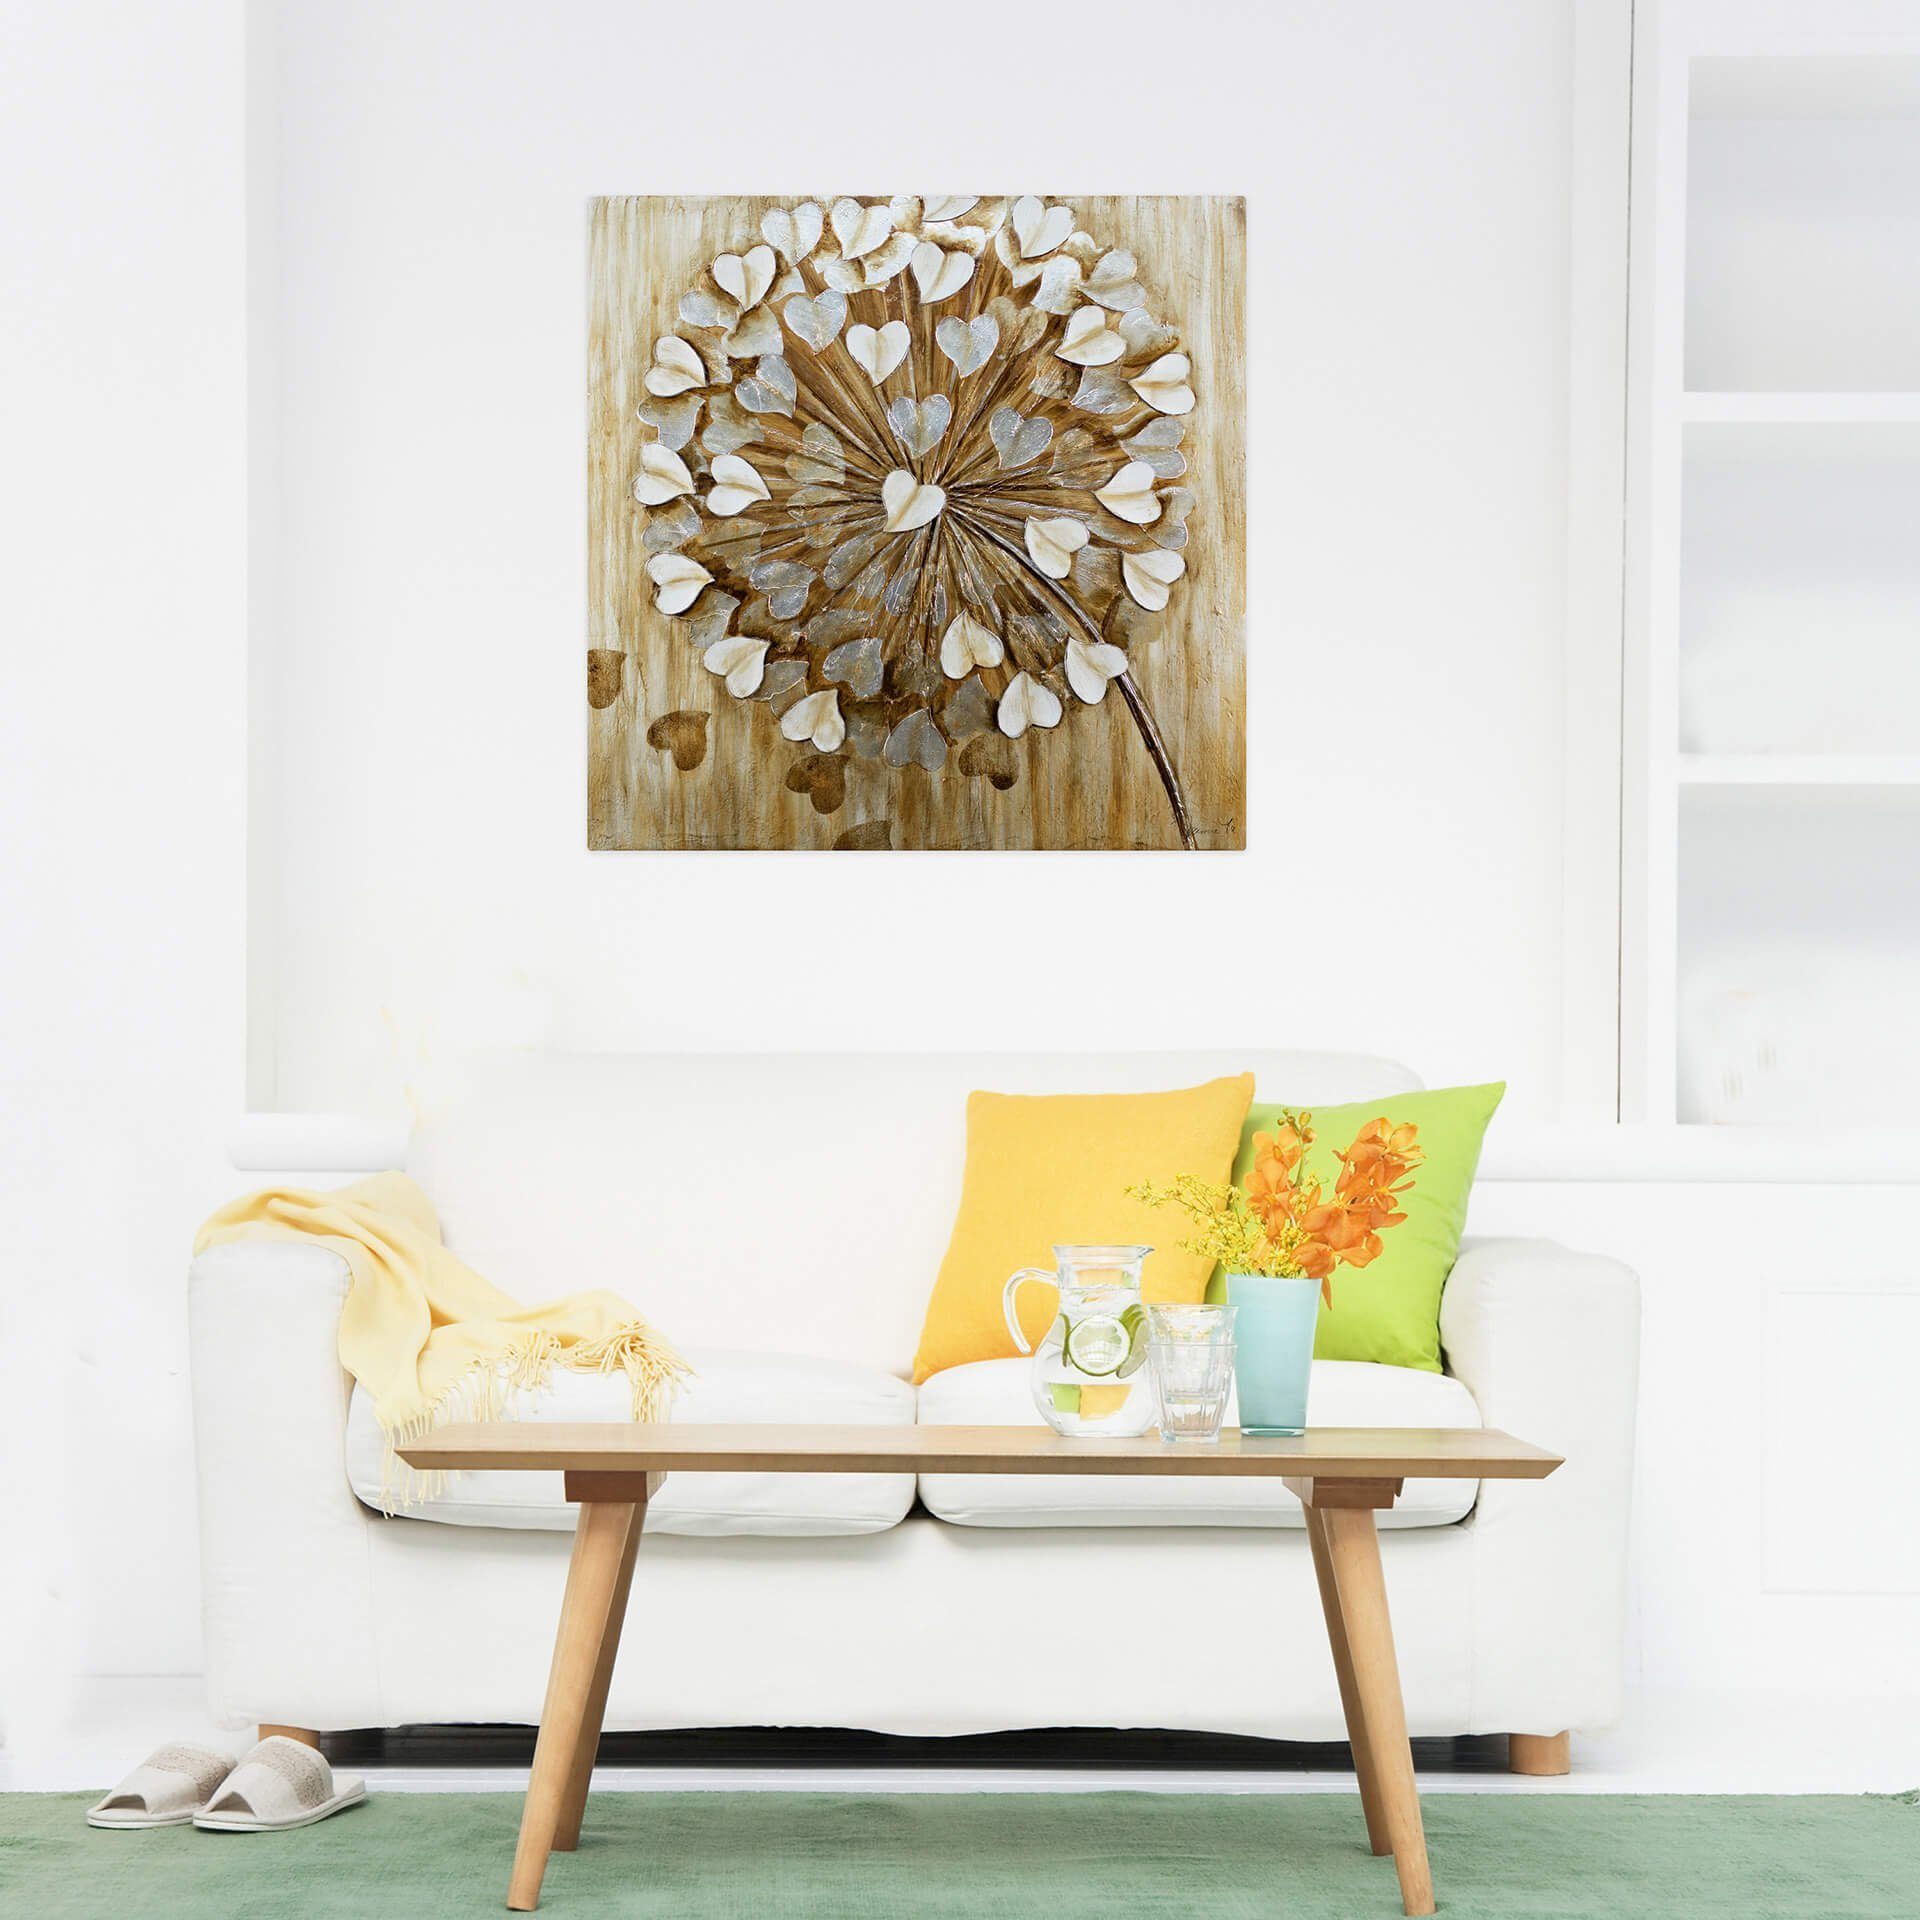 80x80 HANDGEMALT Gemälde im Wandbild Pusteblume Wohnzimmer KUNSTLOFT Wind Leinwandbild cm, 100%